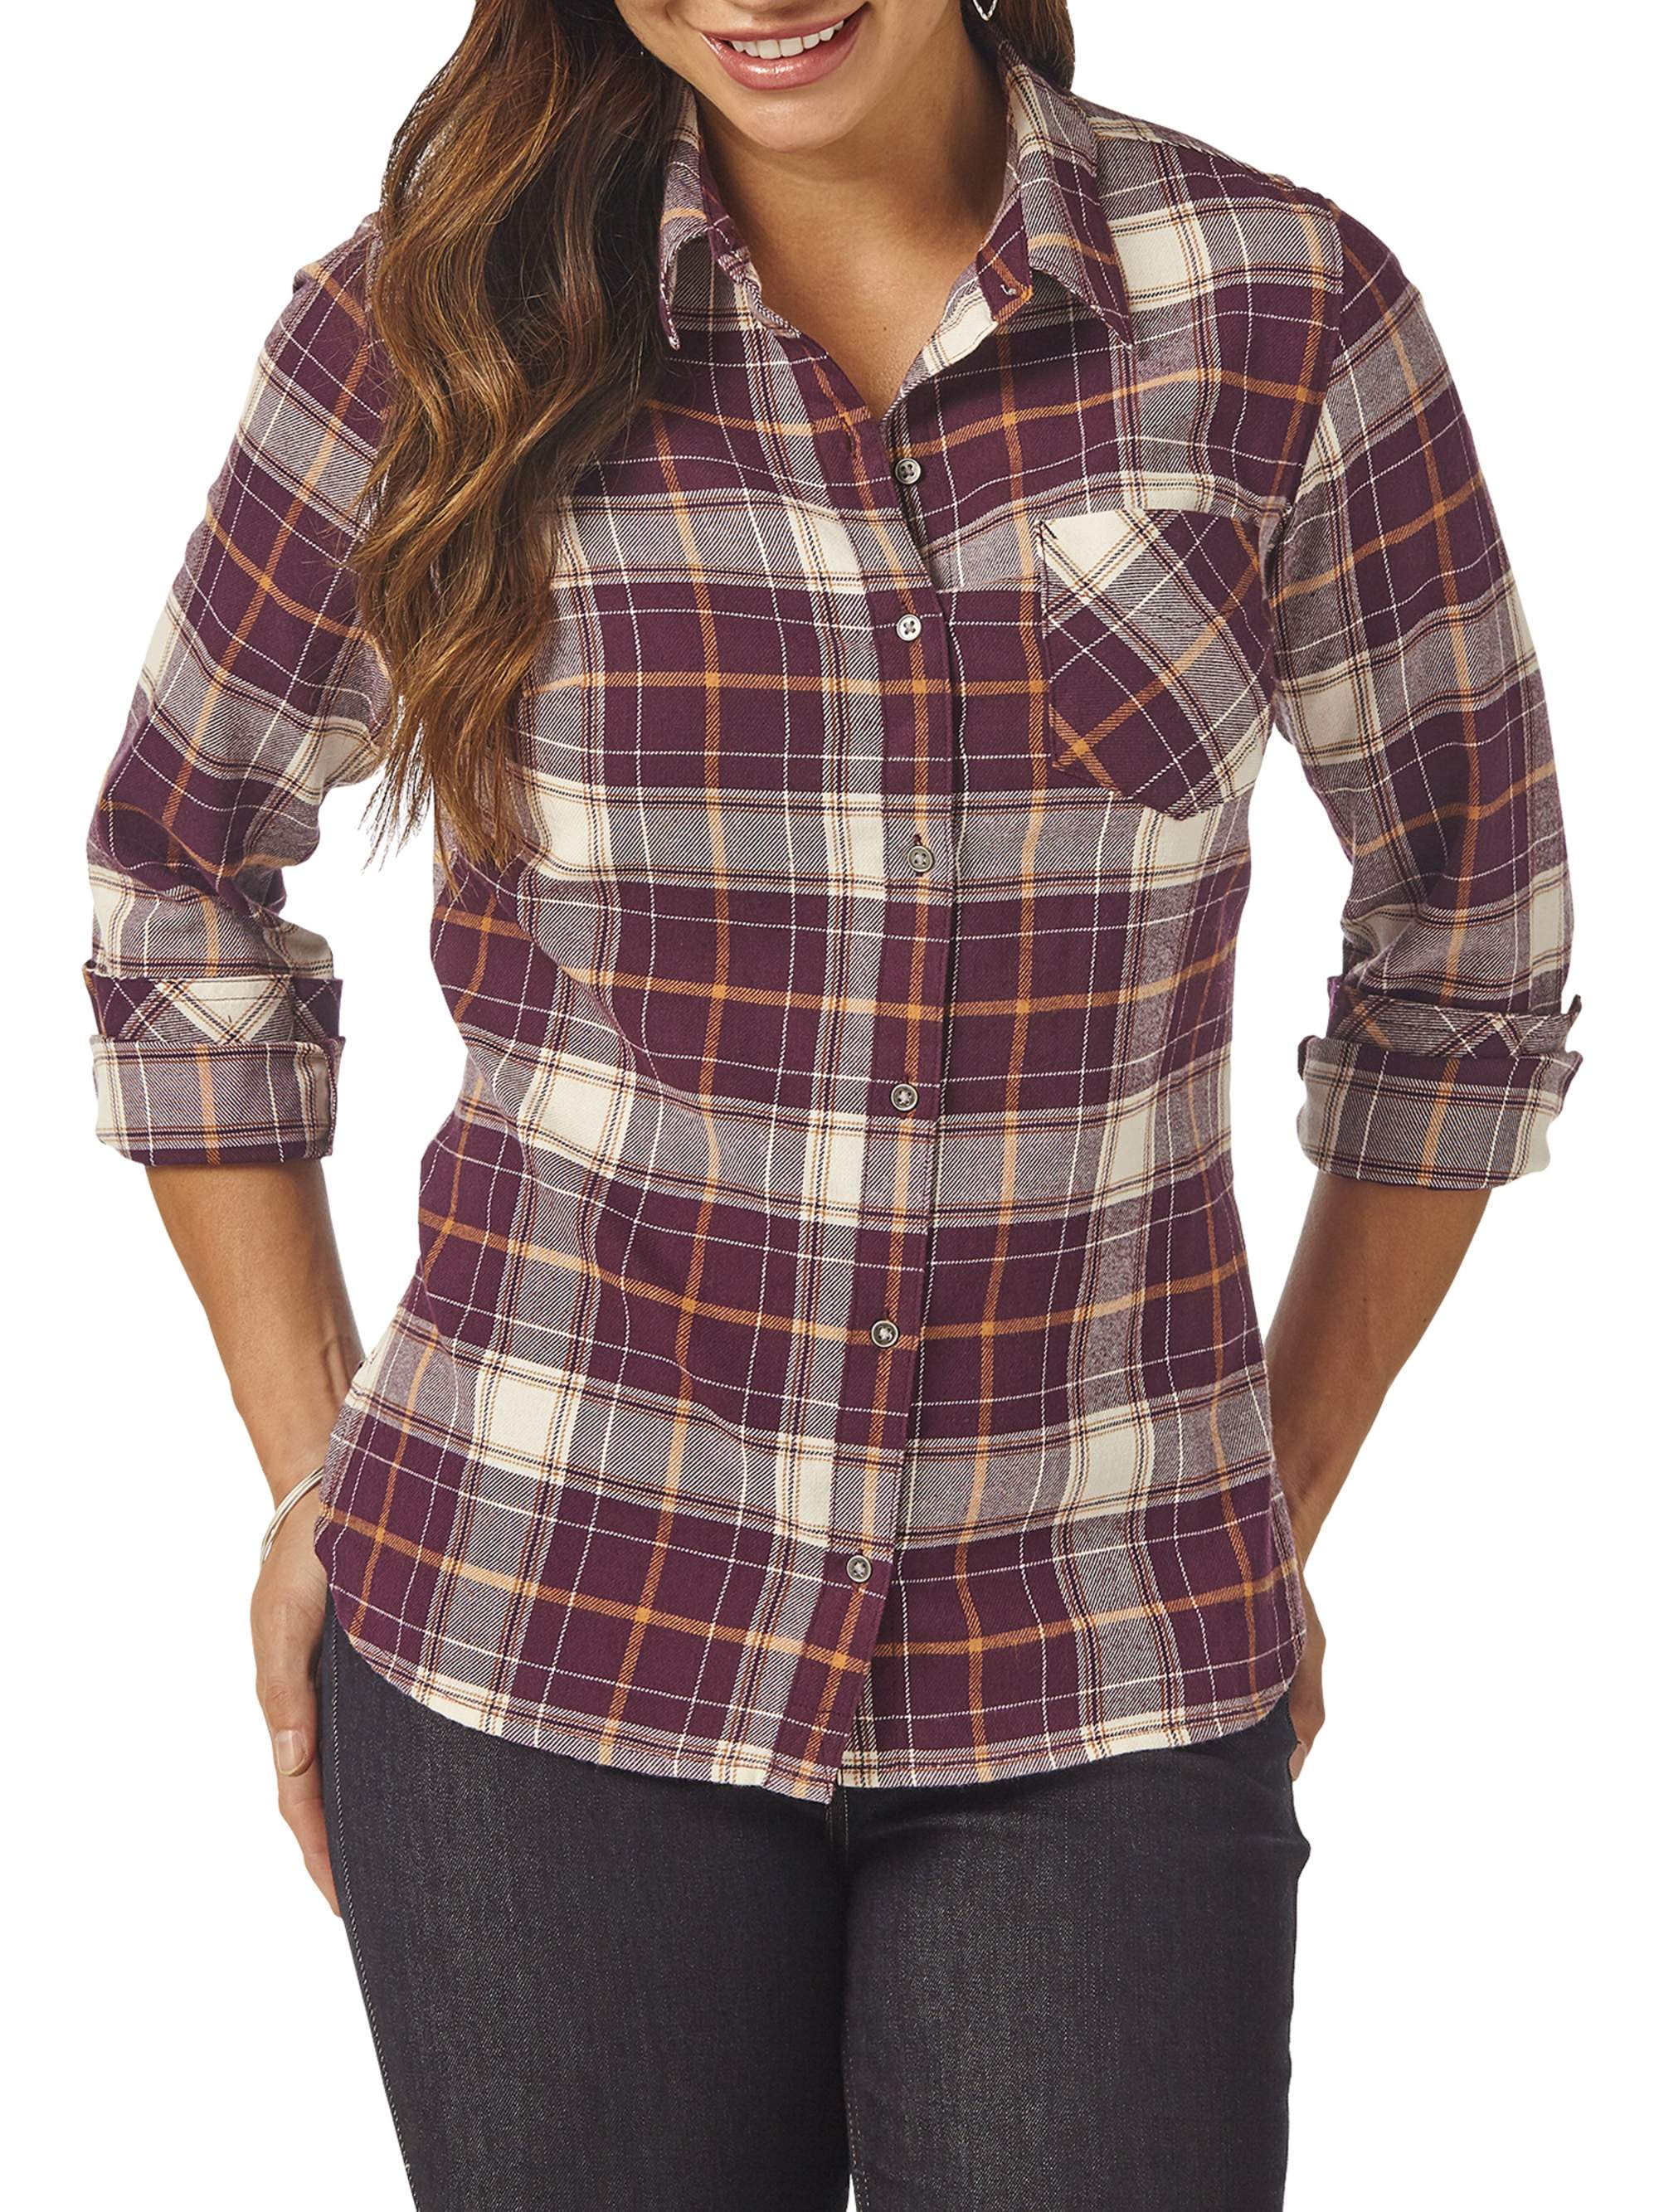 Lee Riders - Lee Riders Women's Modern Heritage Long Sleeve Flannel Shirt - Walmart.com ...